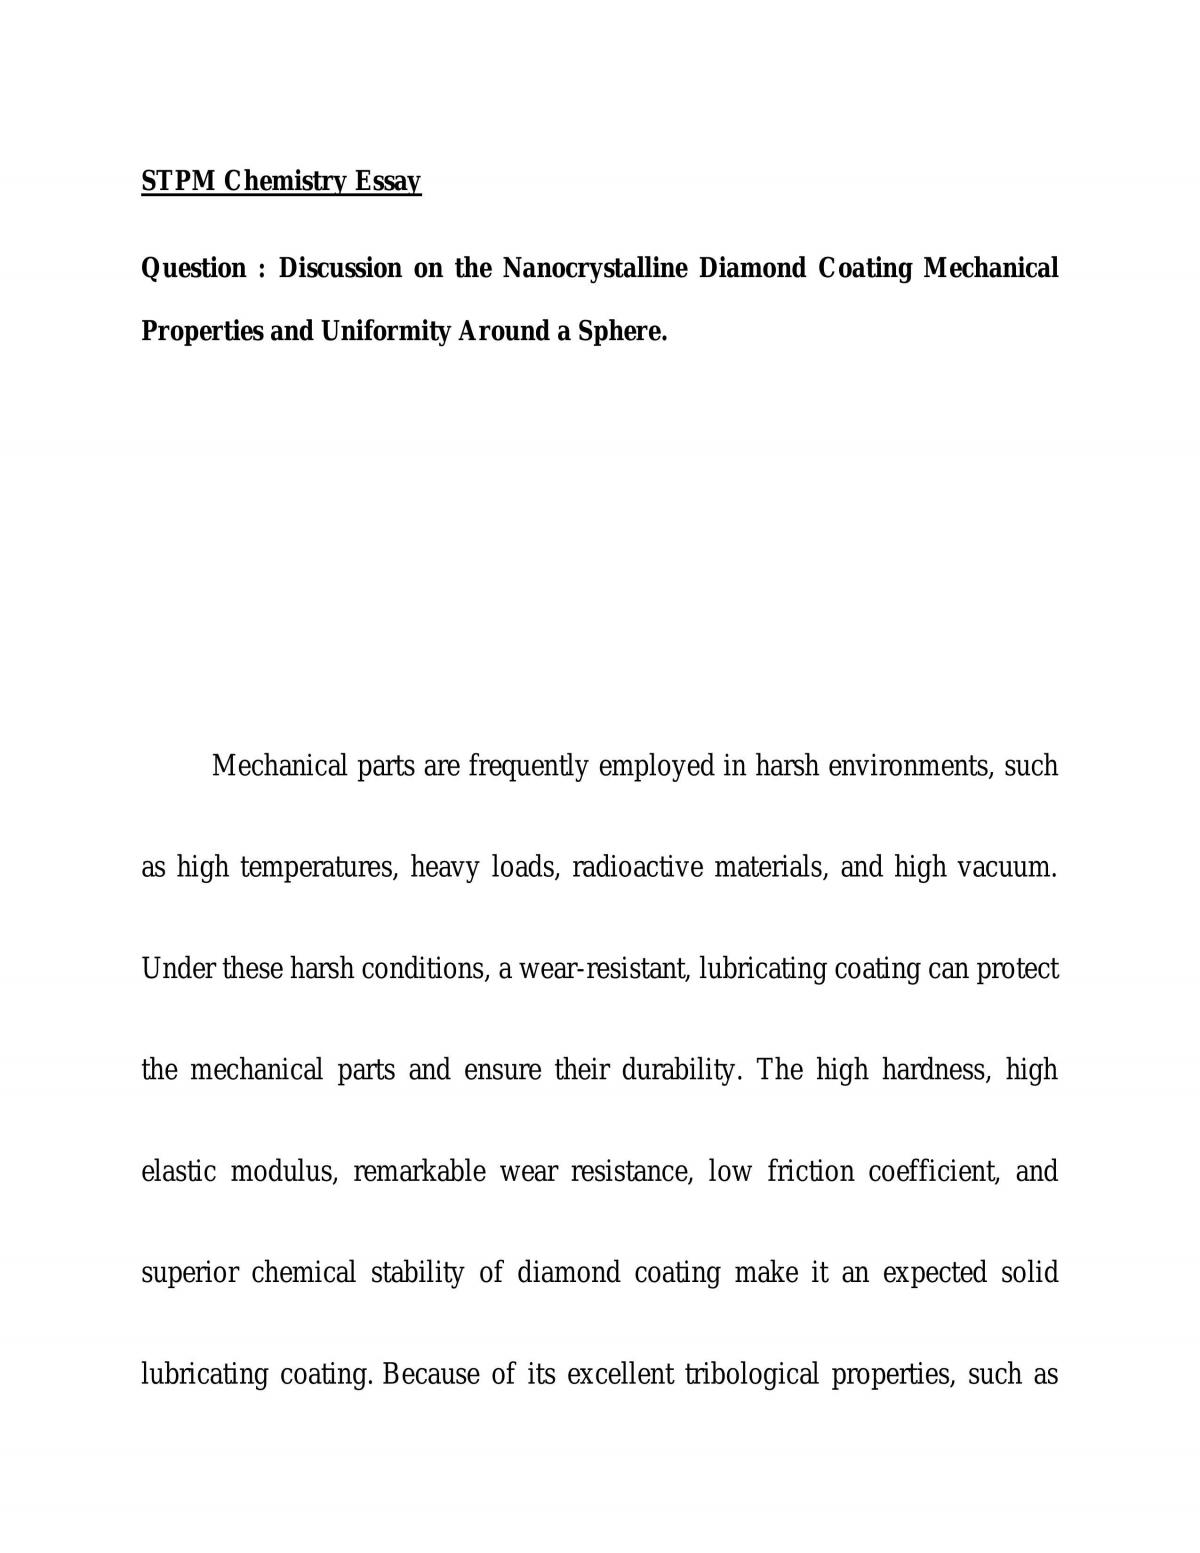 Nanocrystalline diamond coating mechanical properties and uniformity around a sphere. - Page 1